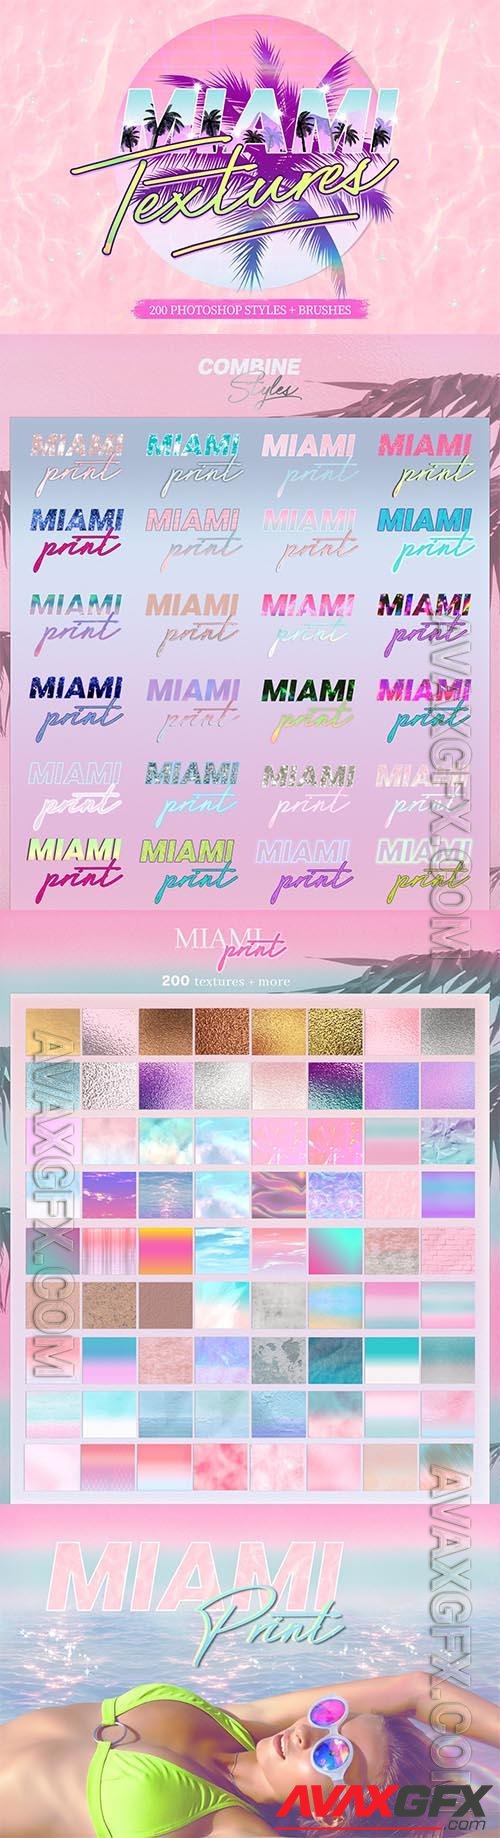 Miami Print Aesthetic PS Styles